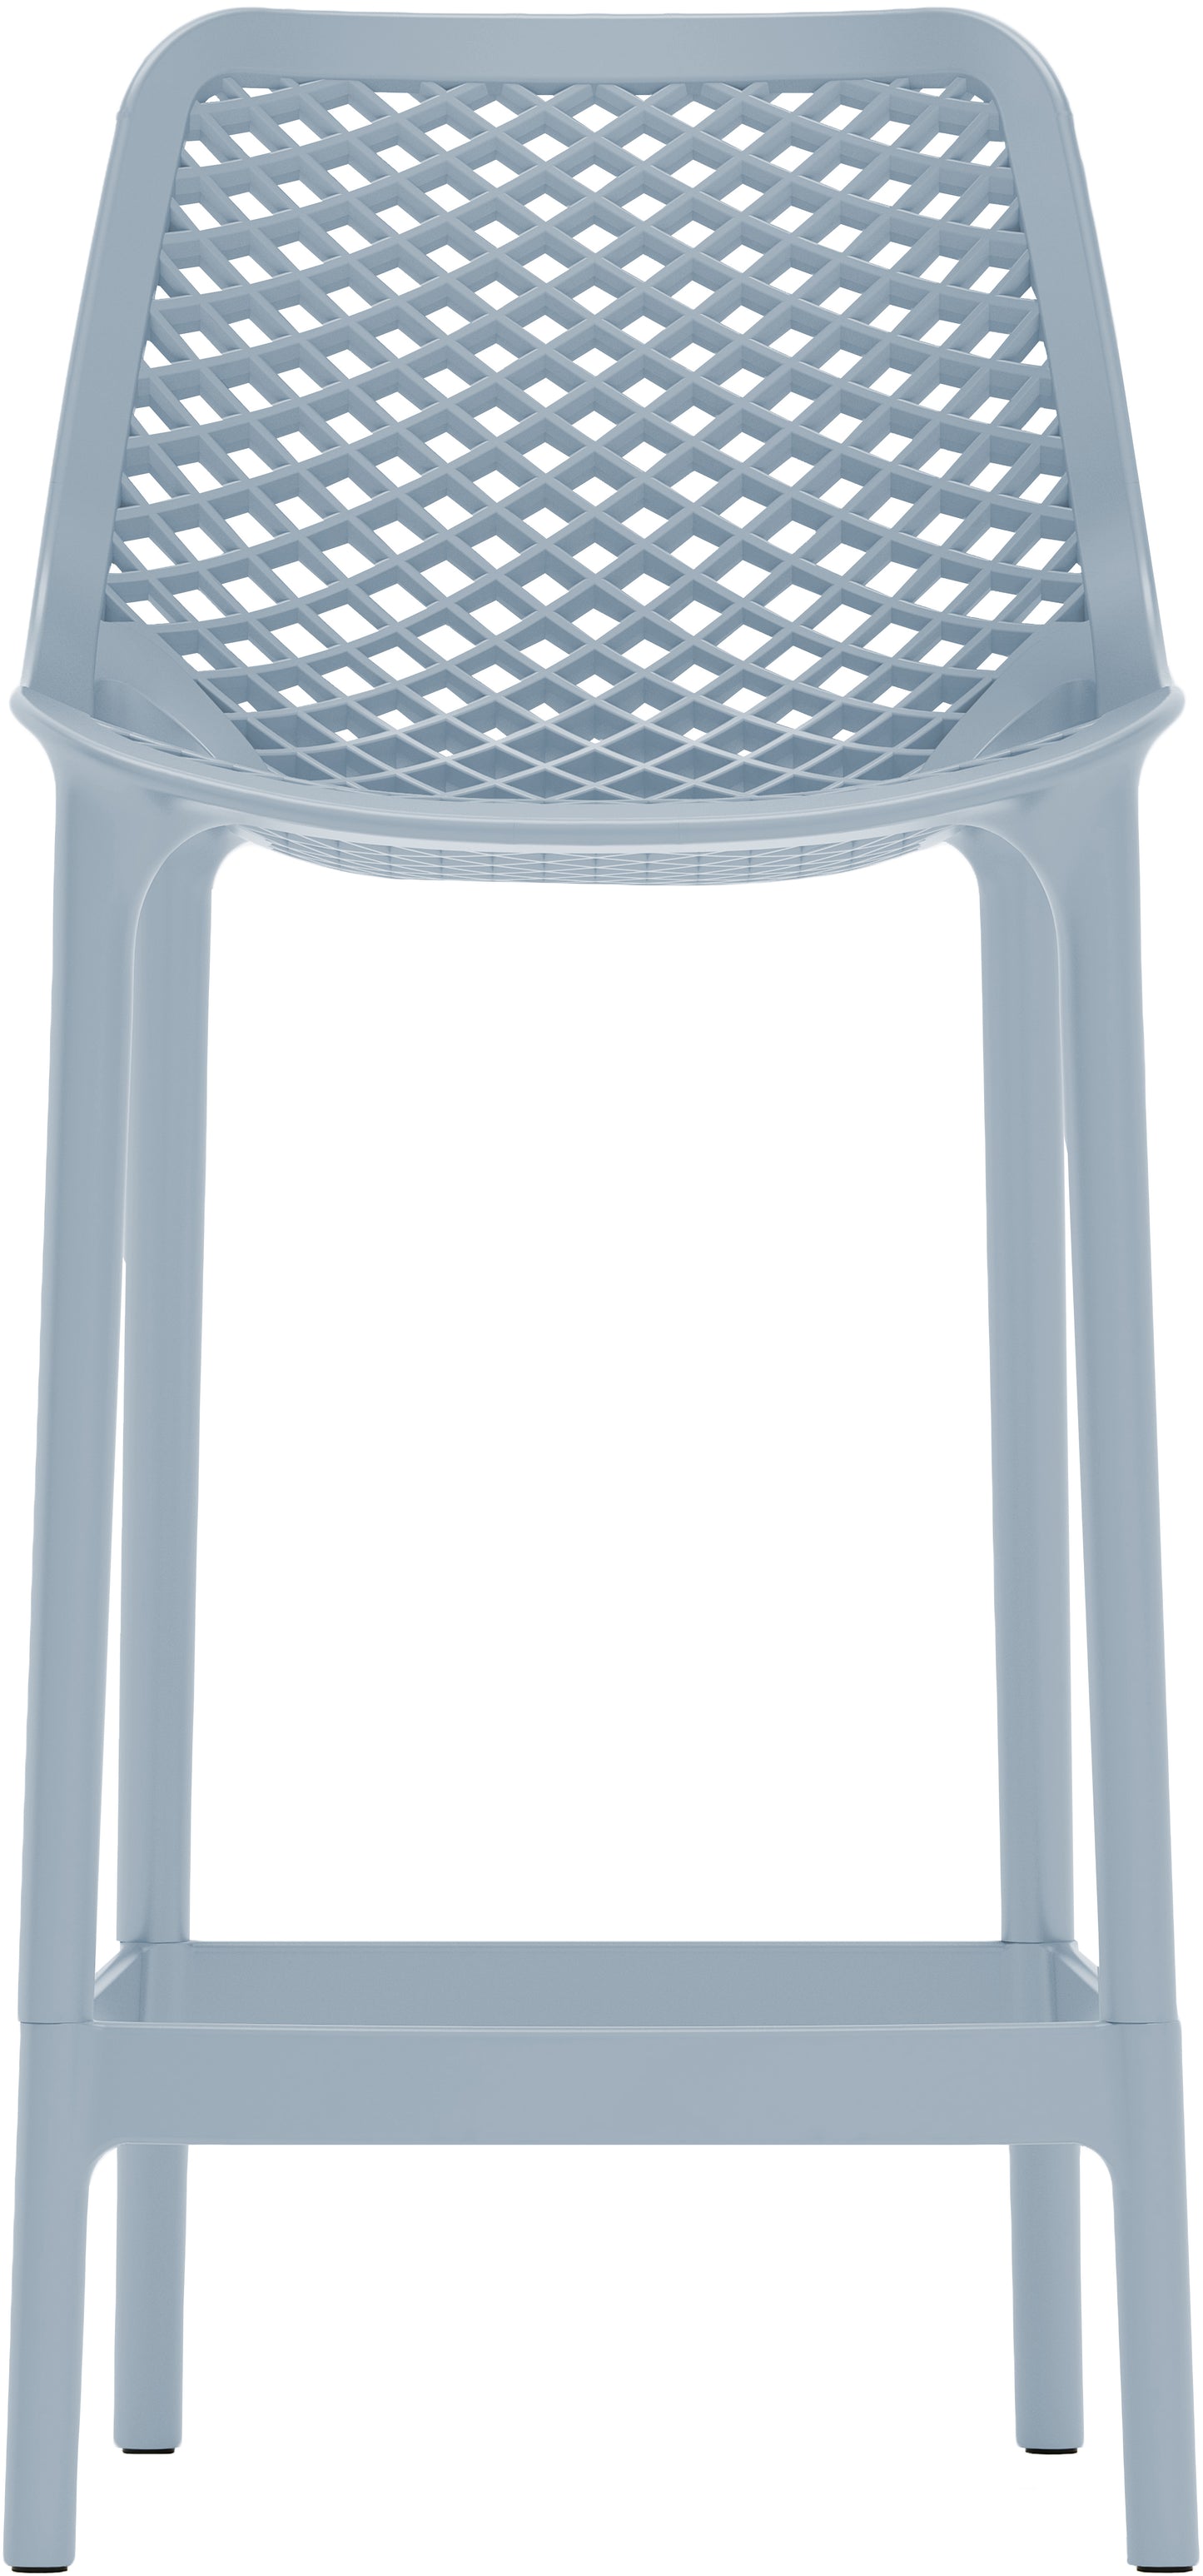 outdoor patio stool